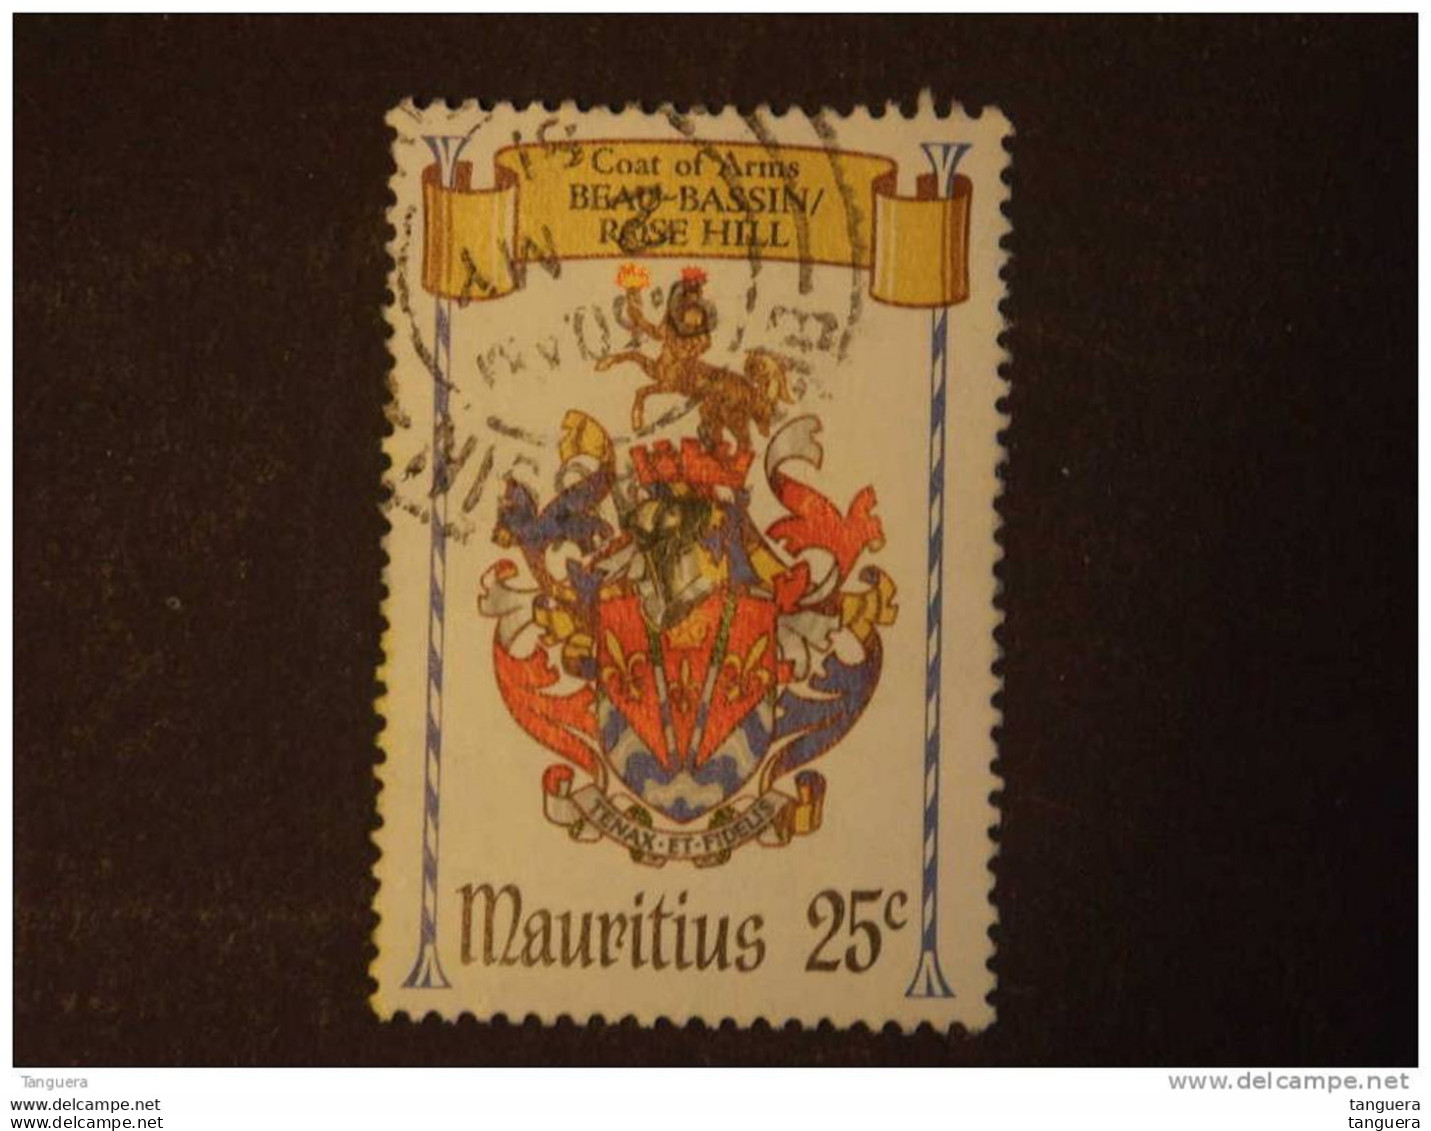 Mauritius Maurice 1981 Armoiries Des Villes Wapenschild Beau-Bassin/Rose Hill Yv 523 O - Maurice (1968-...)